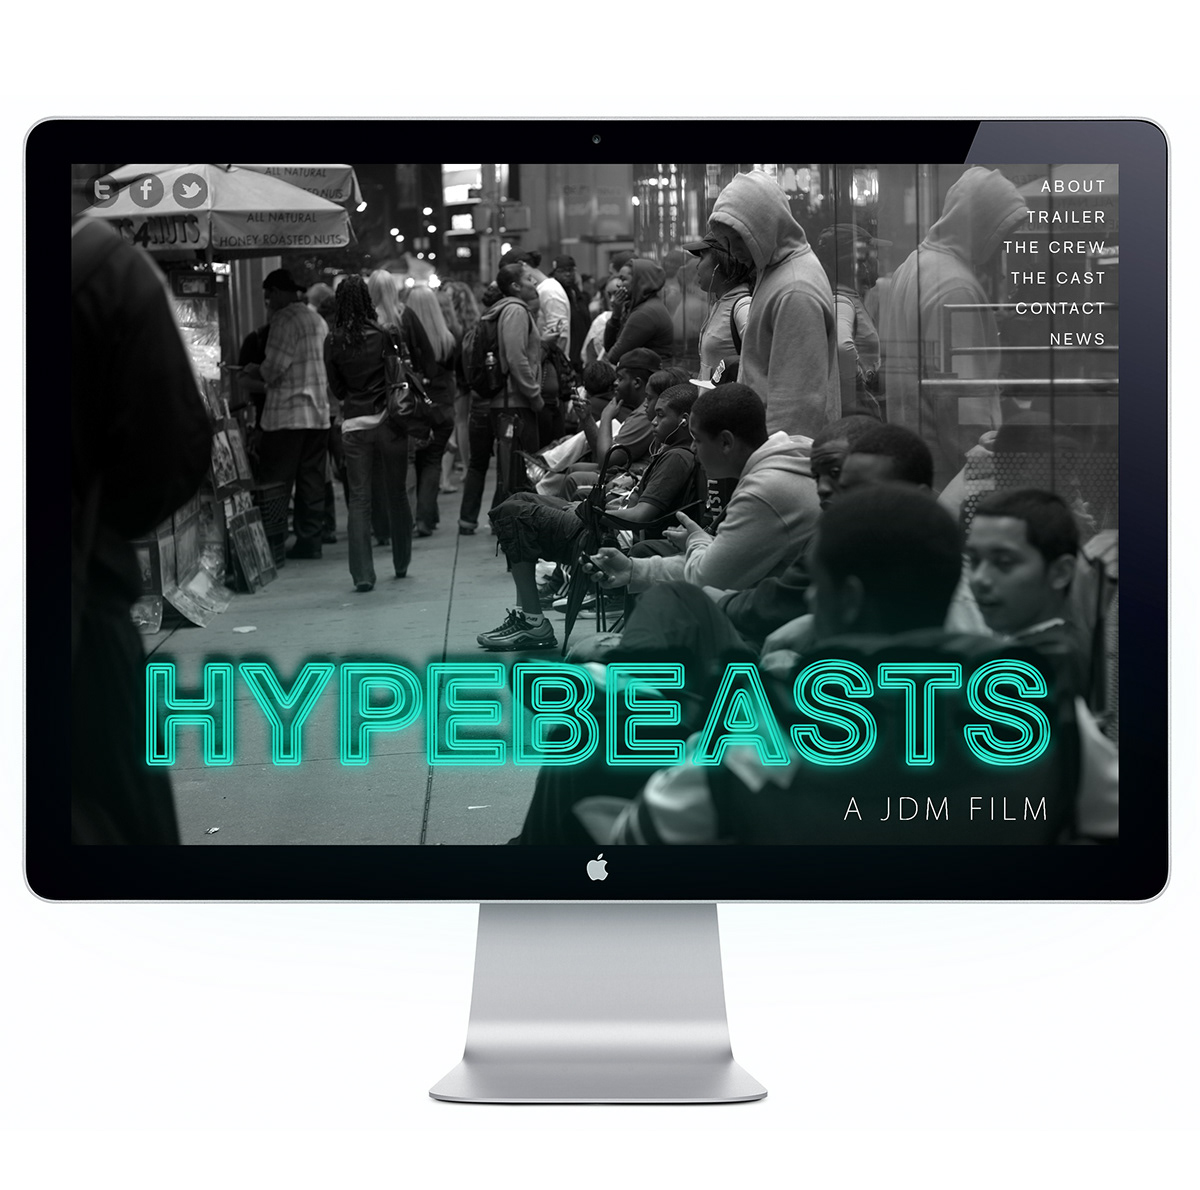 hypebeasts Website type